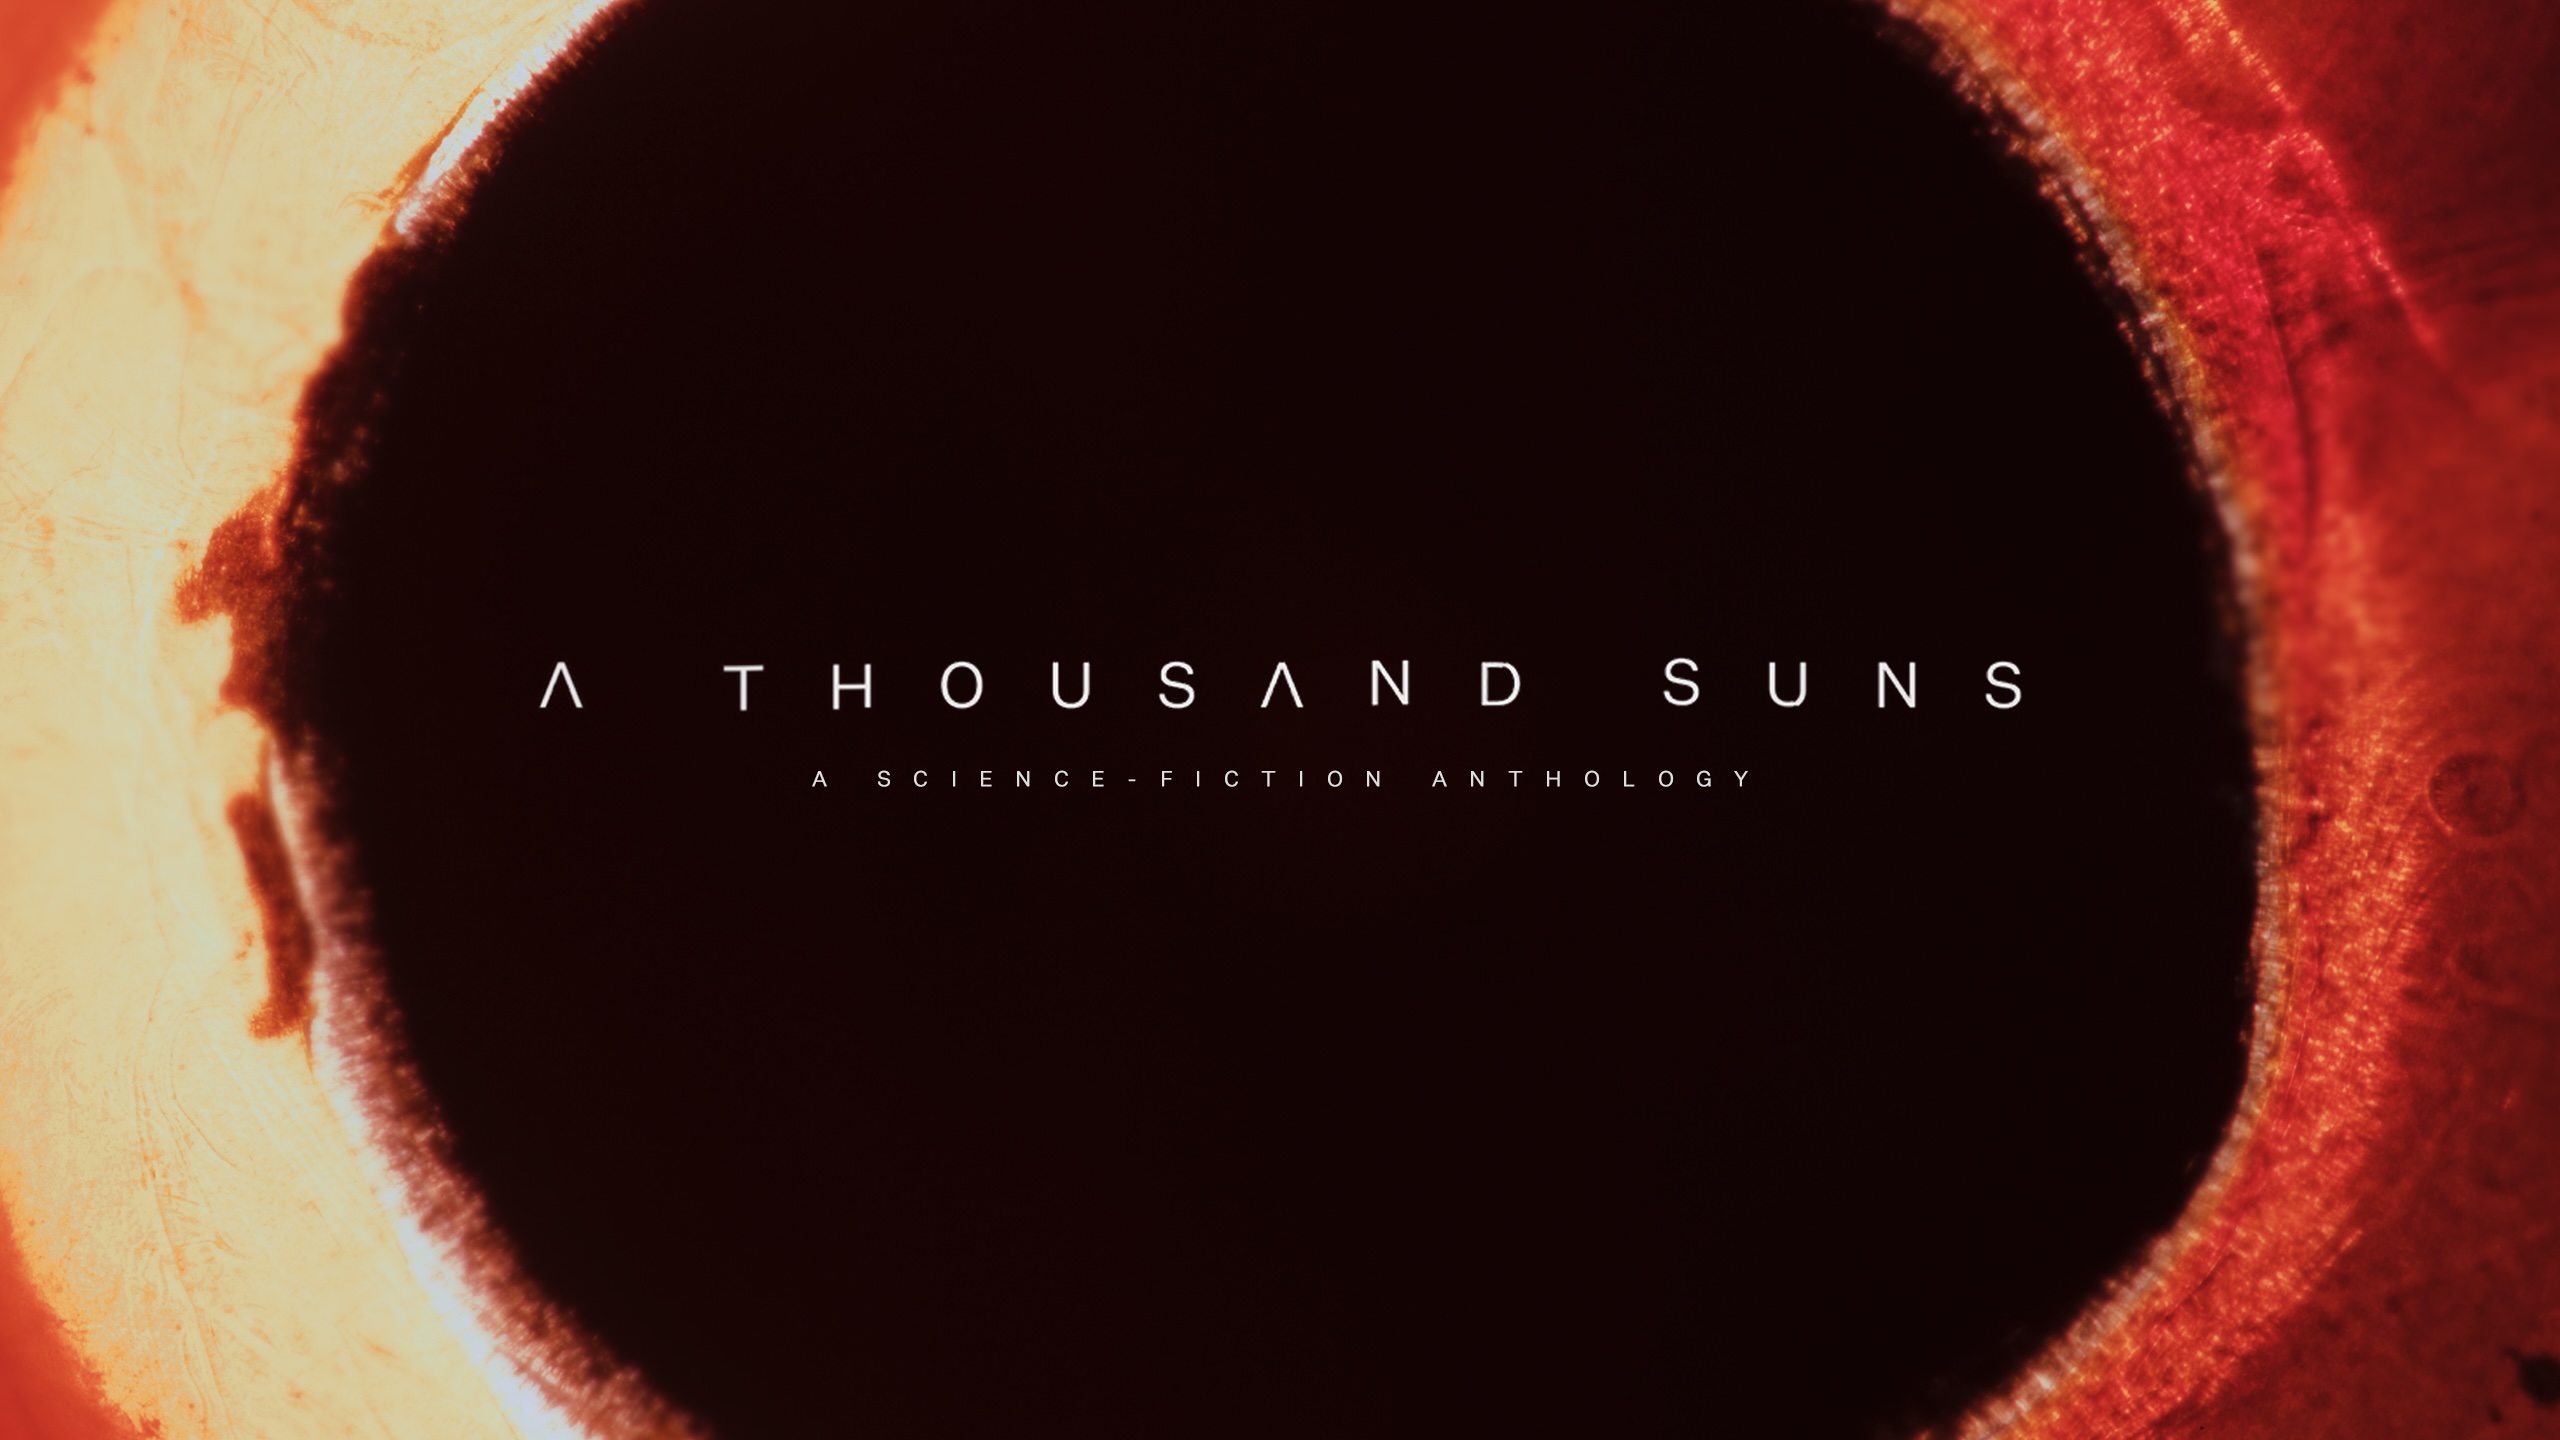 A Thousand Suns sci-fi short film anthology